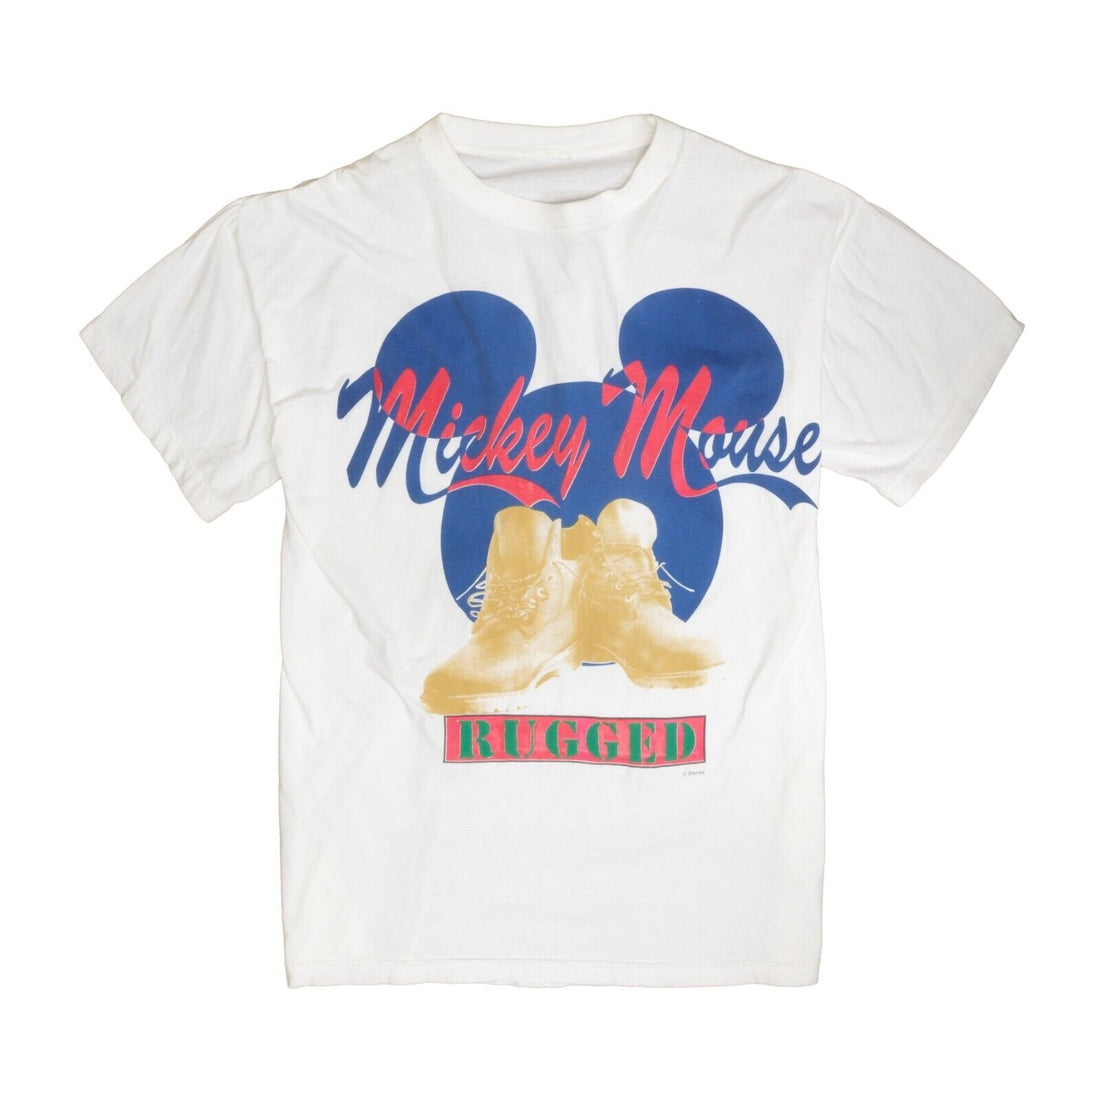 Vintage Mickey Mouse Rugged T-Shirt Size Medium White Disney 90s